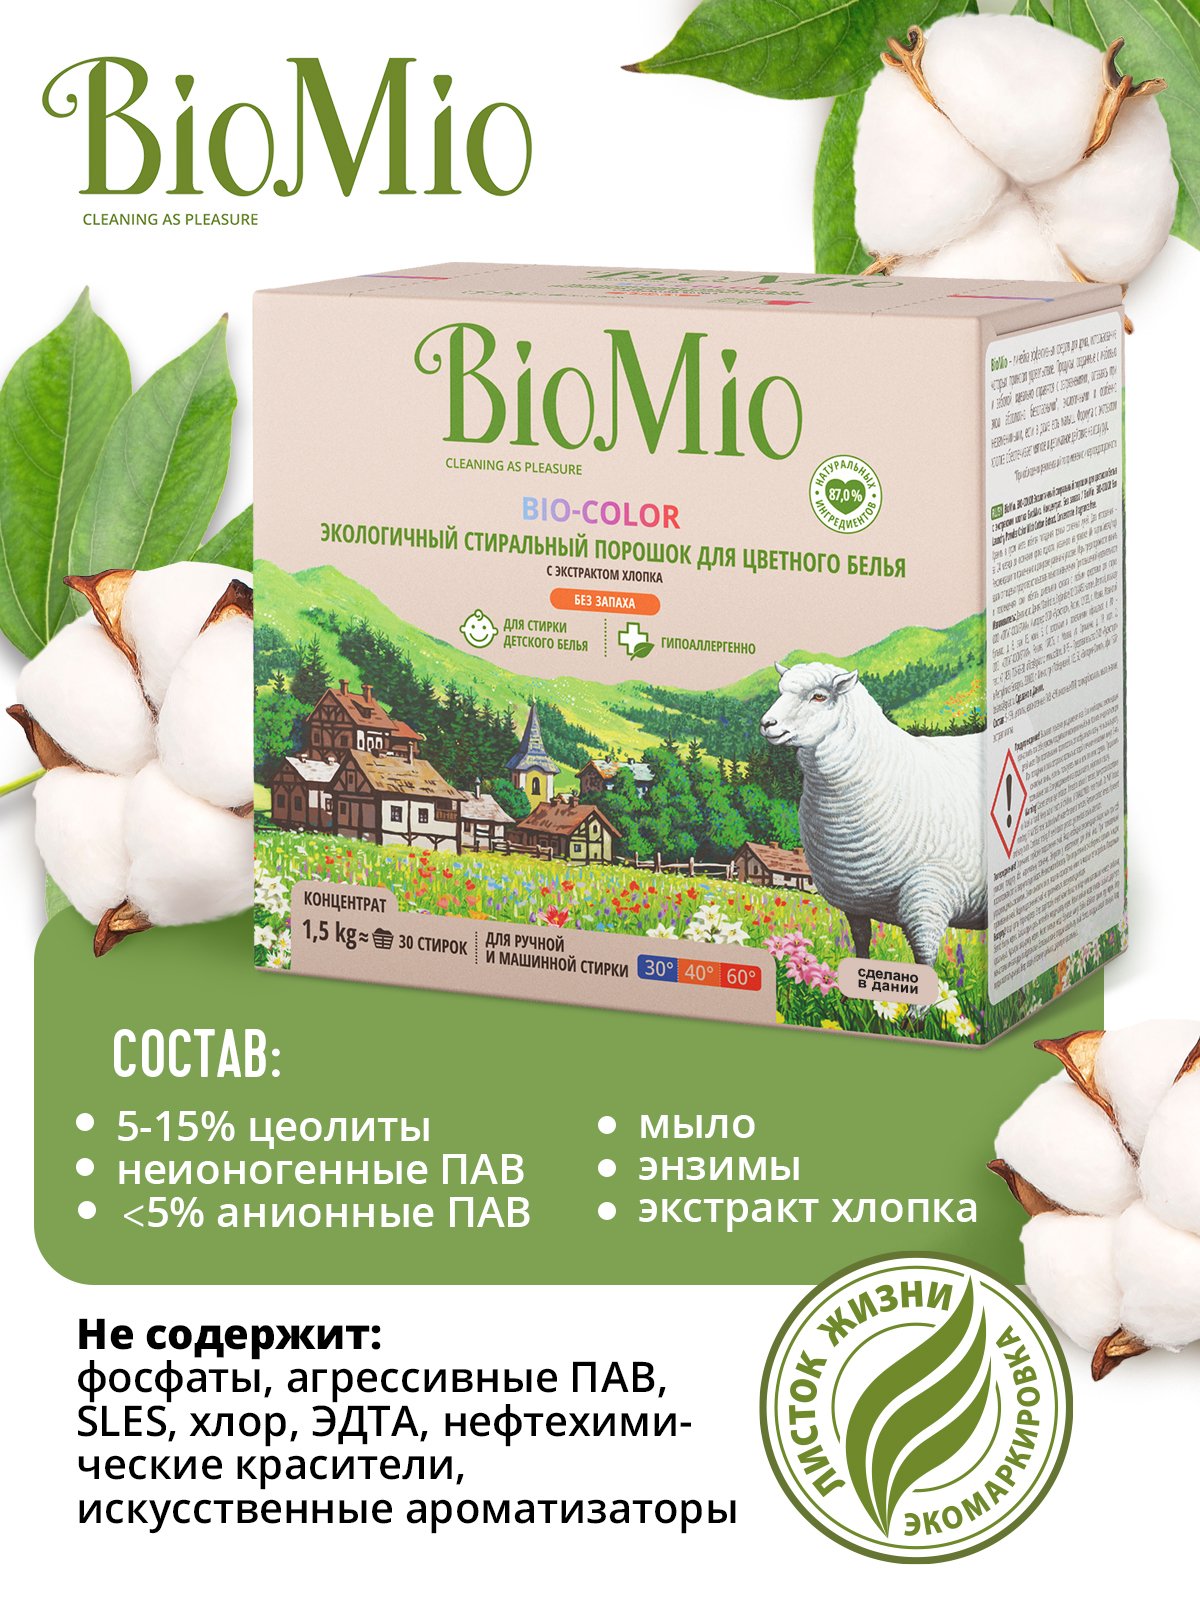 Пральний порошок для кольорової білизни BioMio Bio-Color, концентрат, 1,5 кг - фото 5